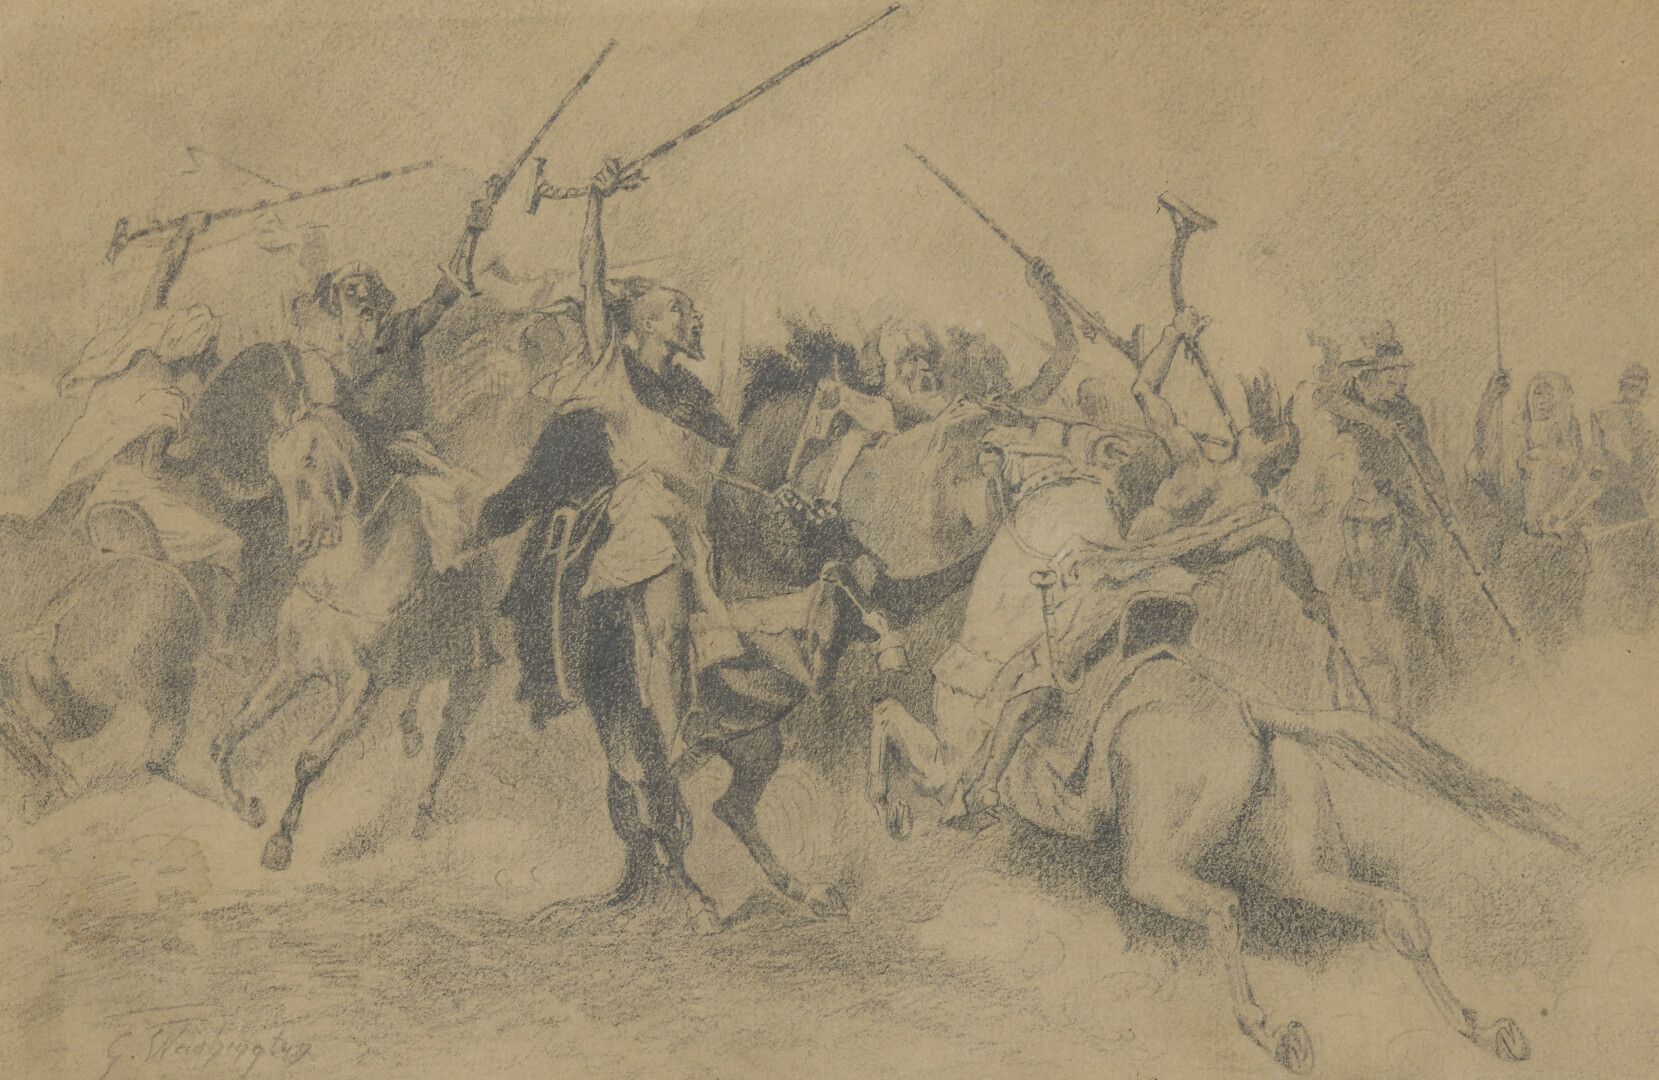 Null 乔治-华盛顿(Georges WASHINGTON) (1827-1910)


幻想曲


石墨画，左下方有签名。


16 x 24 厘米